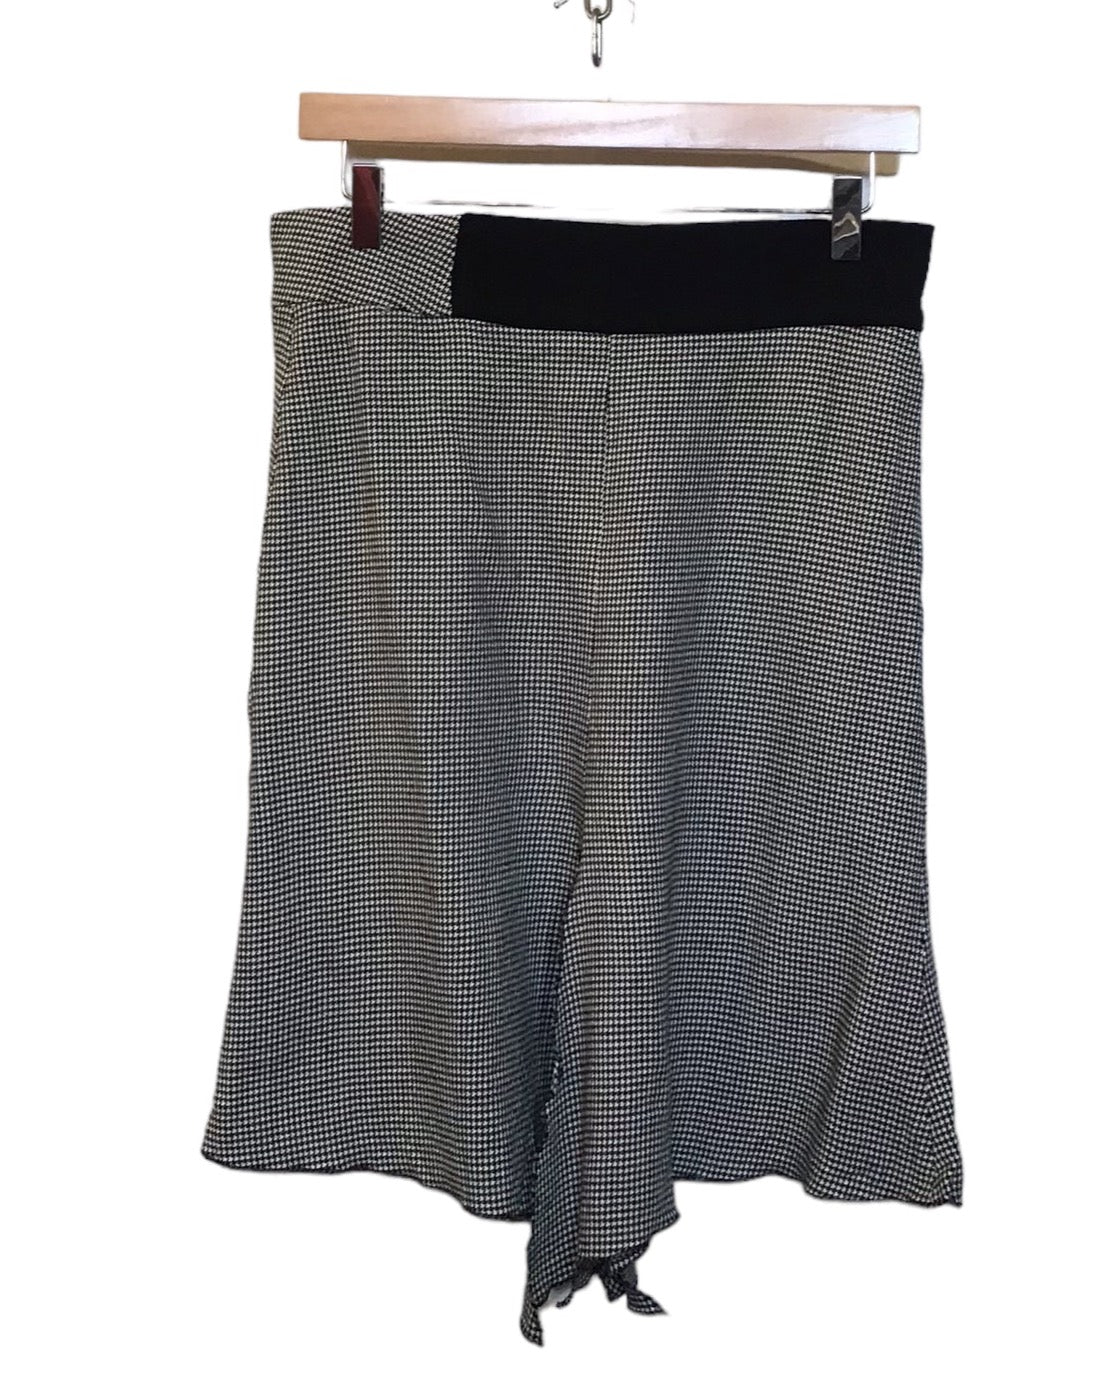 Joseph Checkered Skirt (Size M)